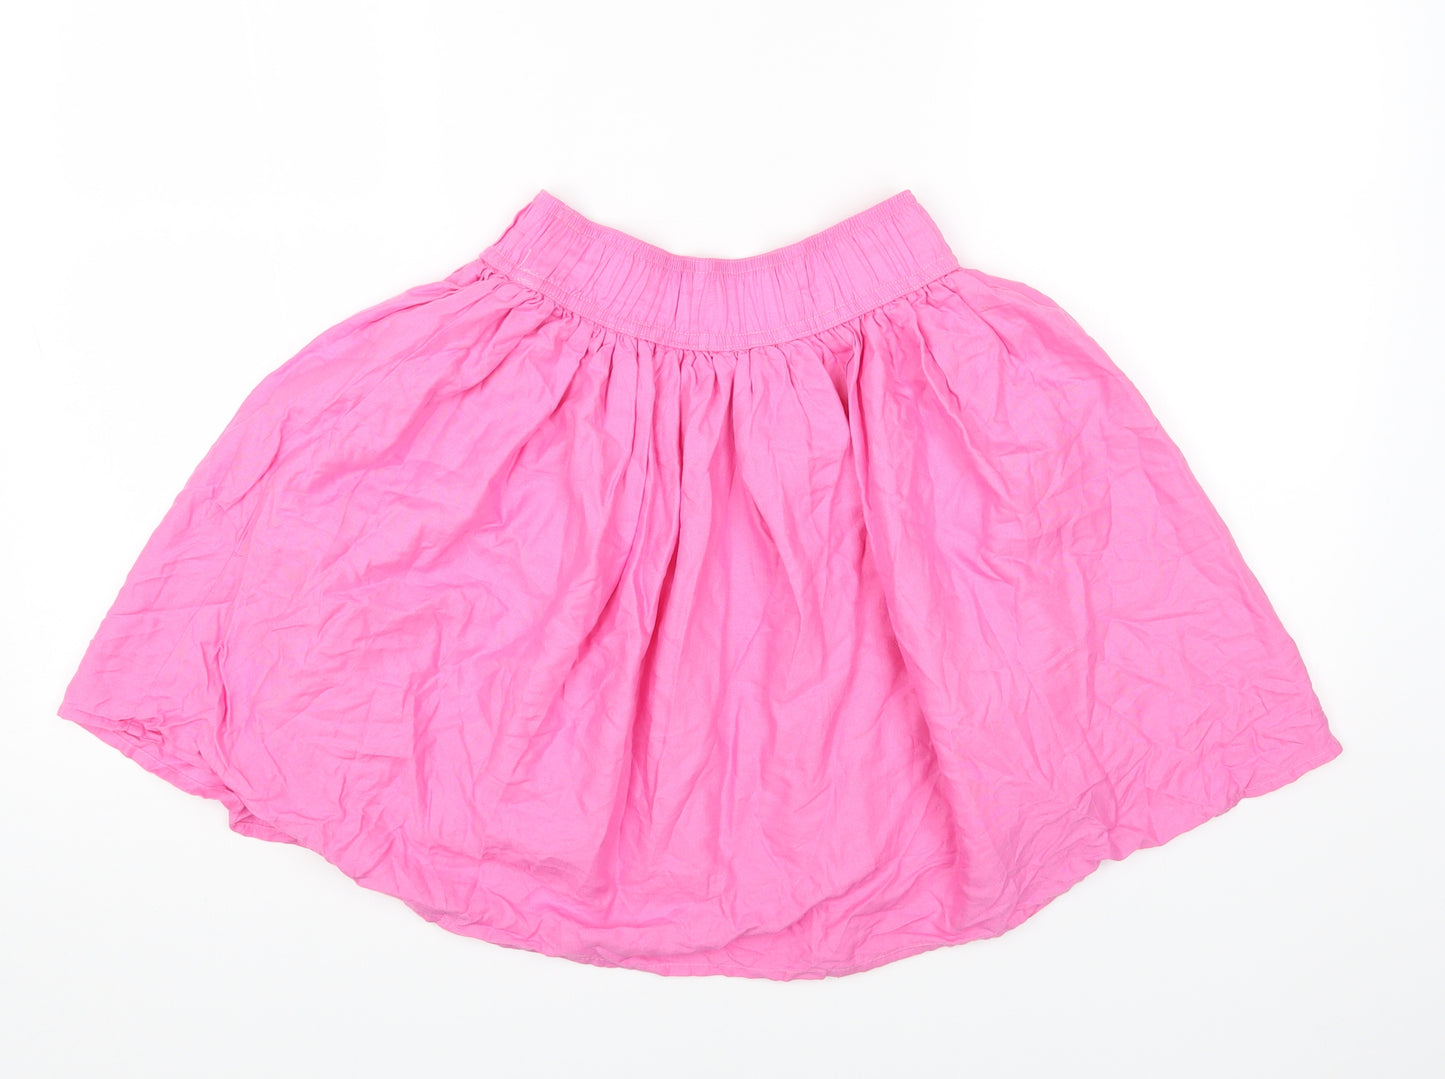 L.O.G.G Girls Pink Viscose Mini Skirt Size 12-13 Years Regular